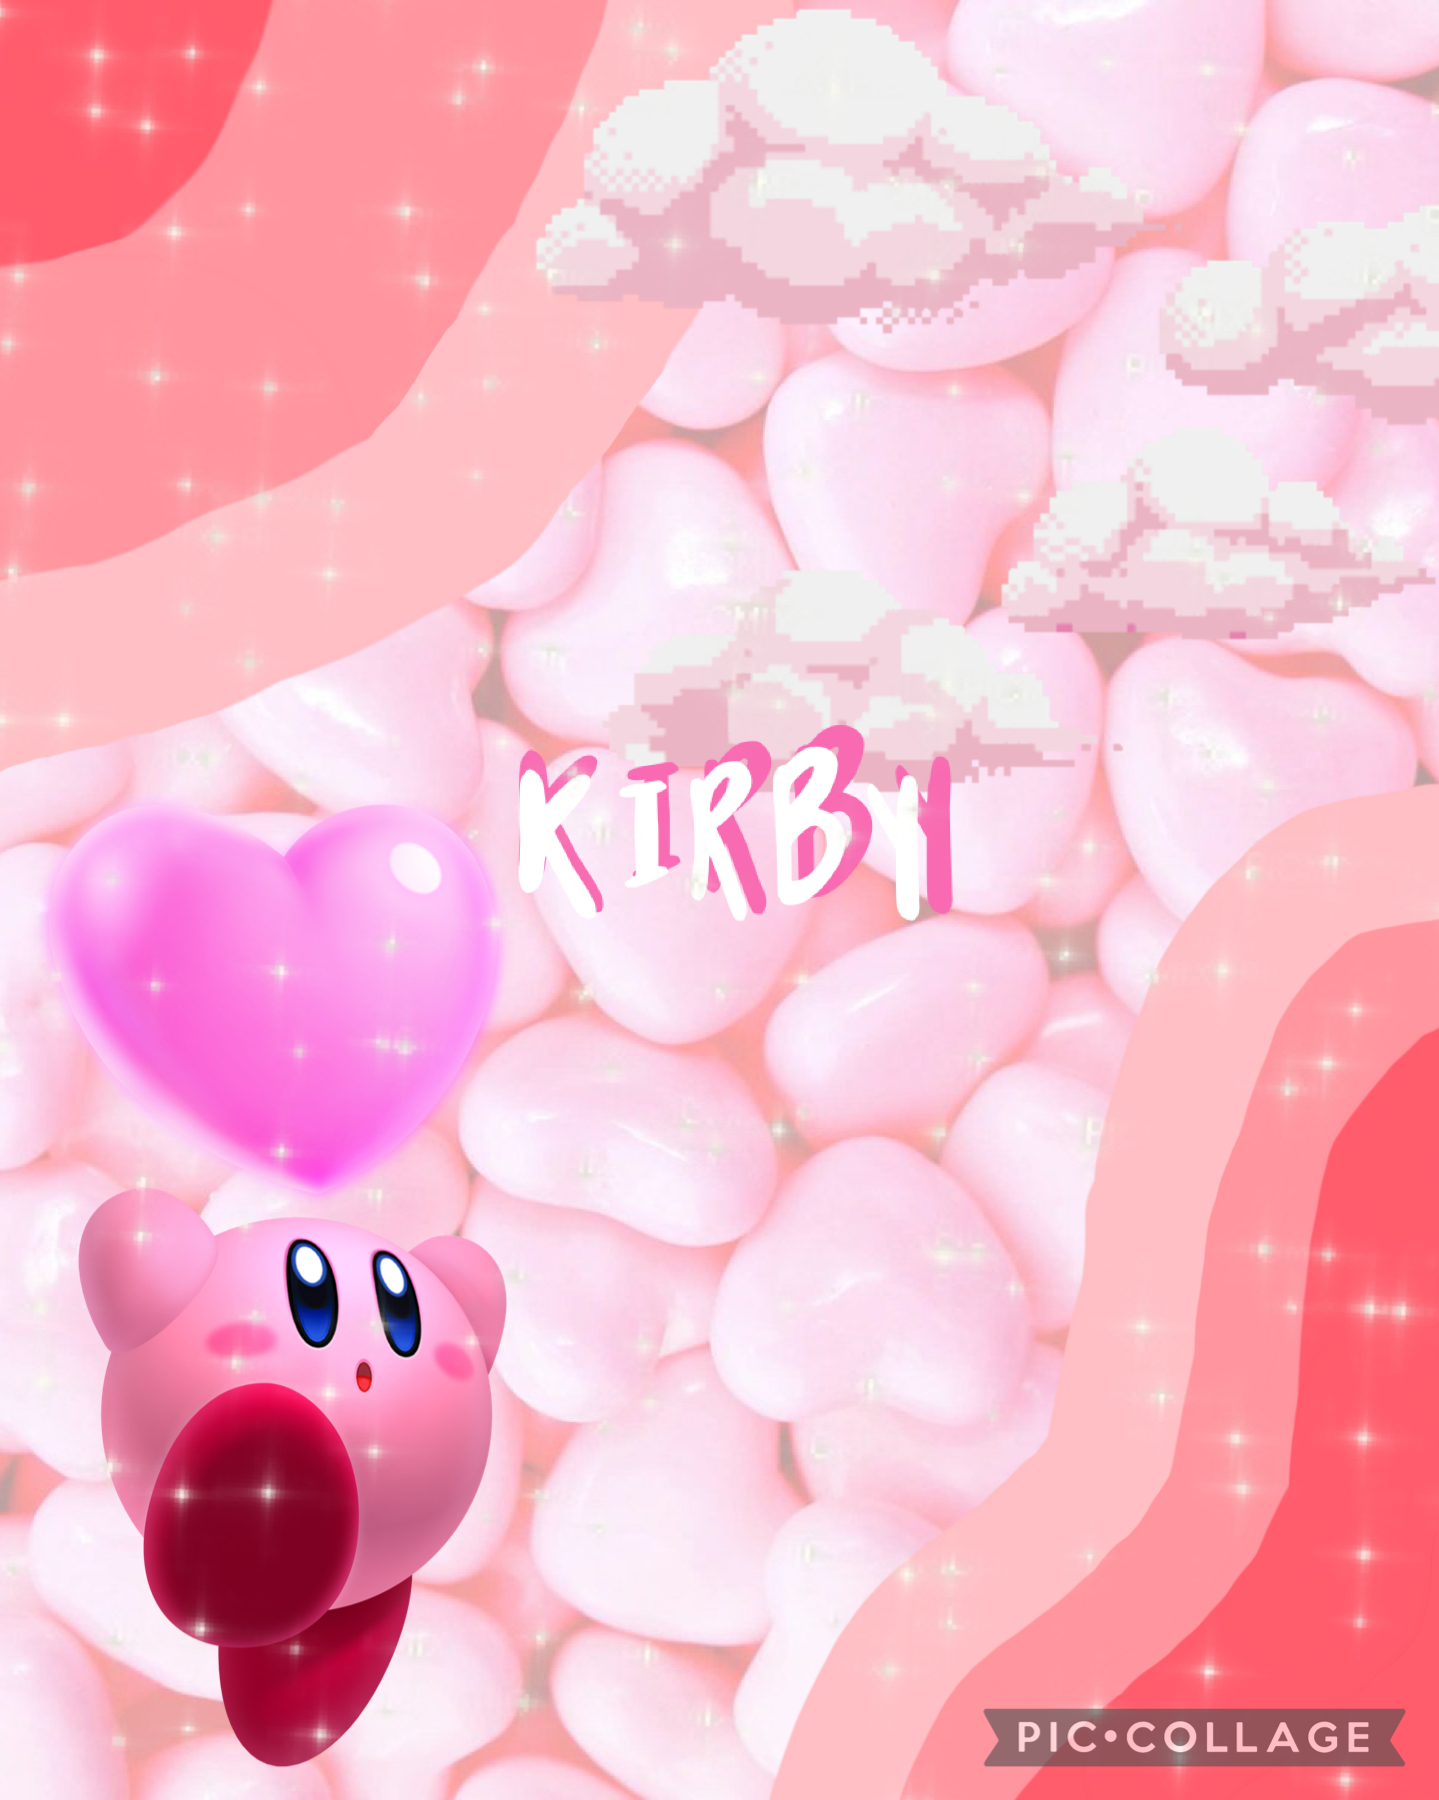 I’m bored so I’m posting a bunch of random things lol, here’s Kirby ❤️ 🍋 